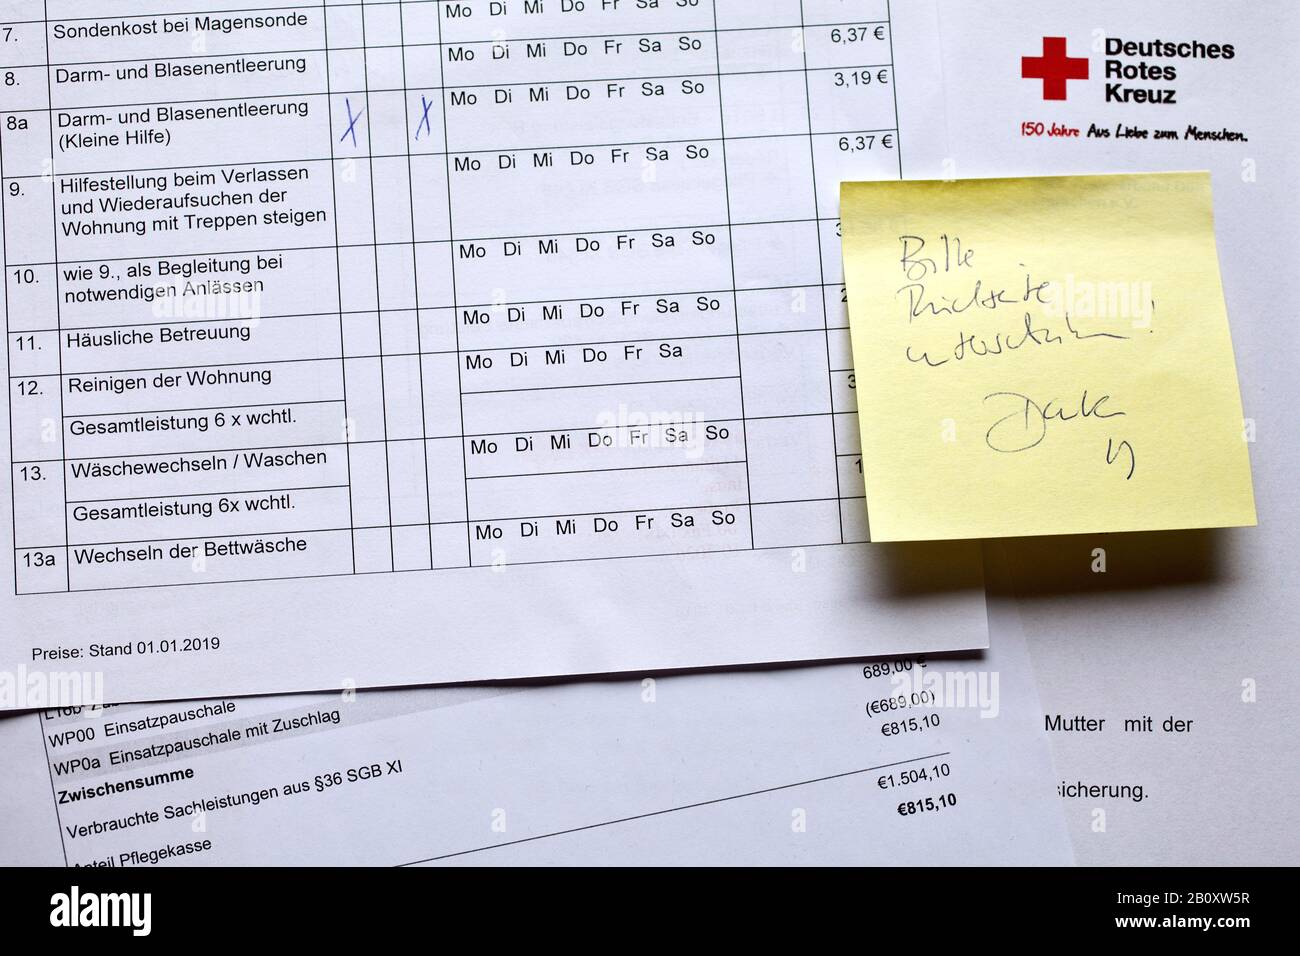 ambulant care contract, Germany Stock Photo